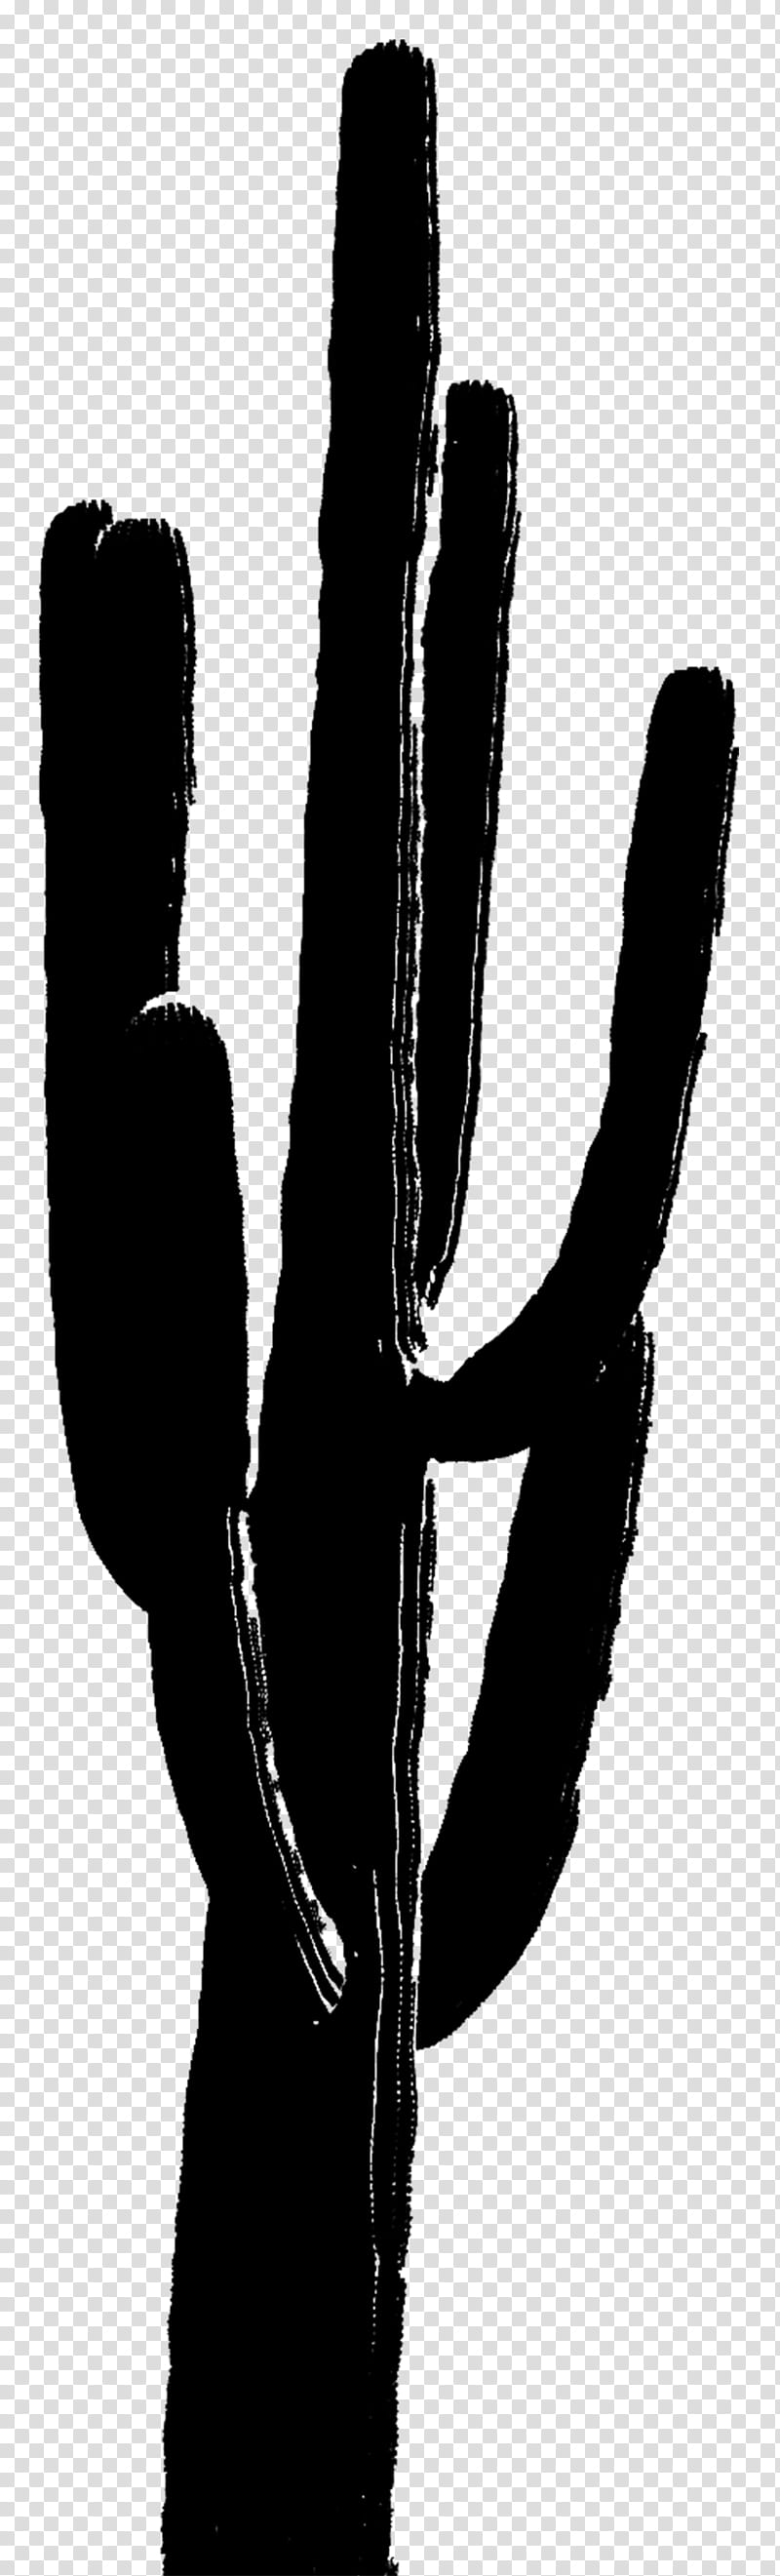 Black And White Flower, Finger, Black White M, Saguaro, Cactus, Hand, Blackandwhite, Plant transparent background PNG clipart